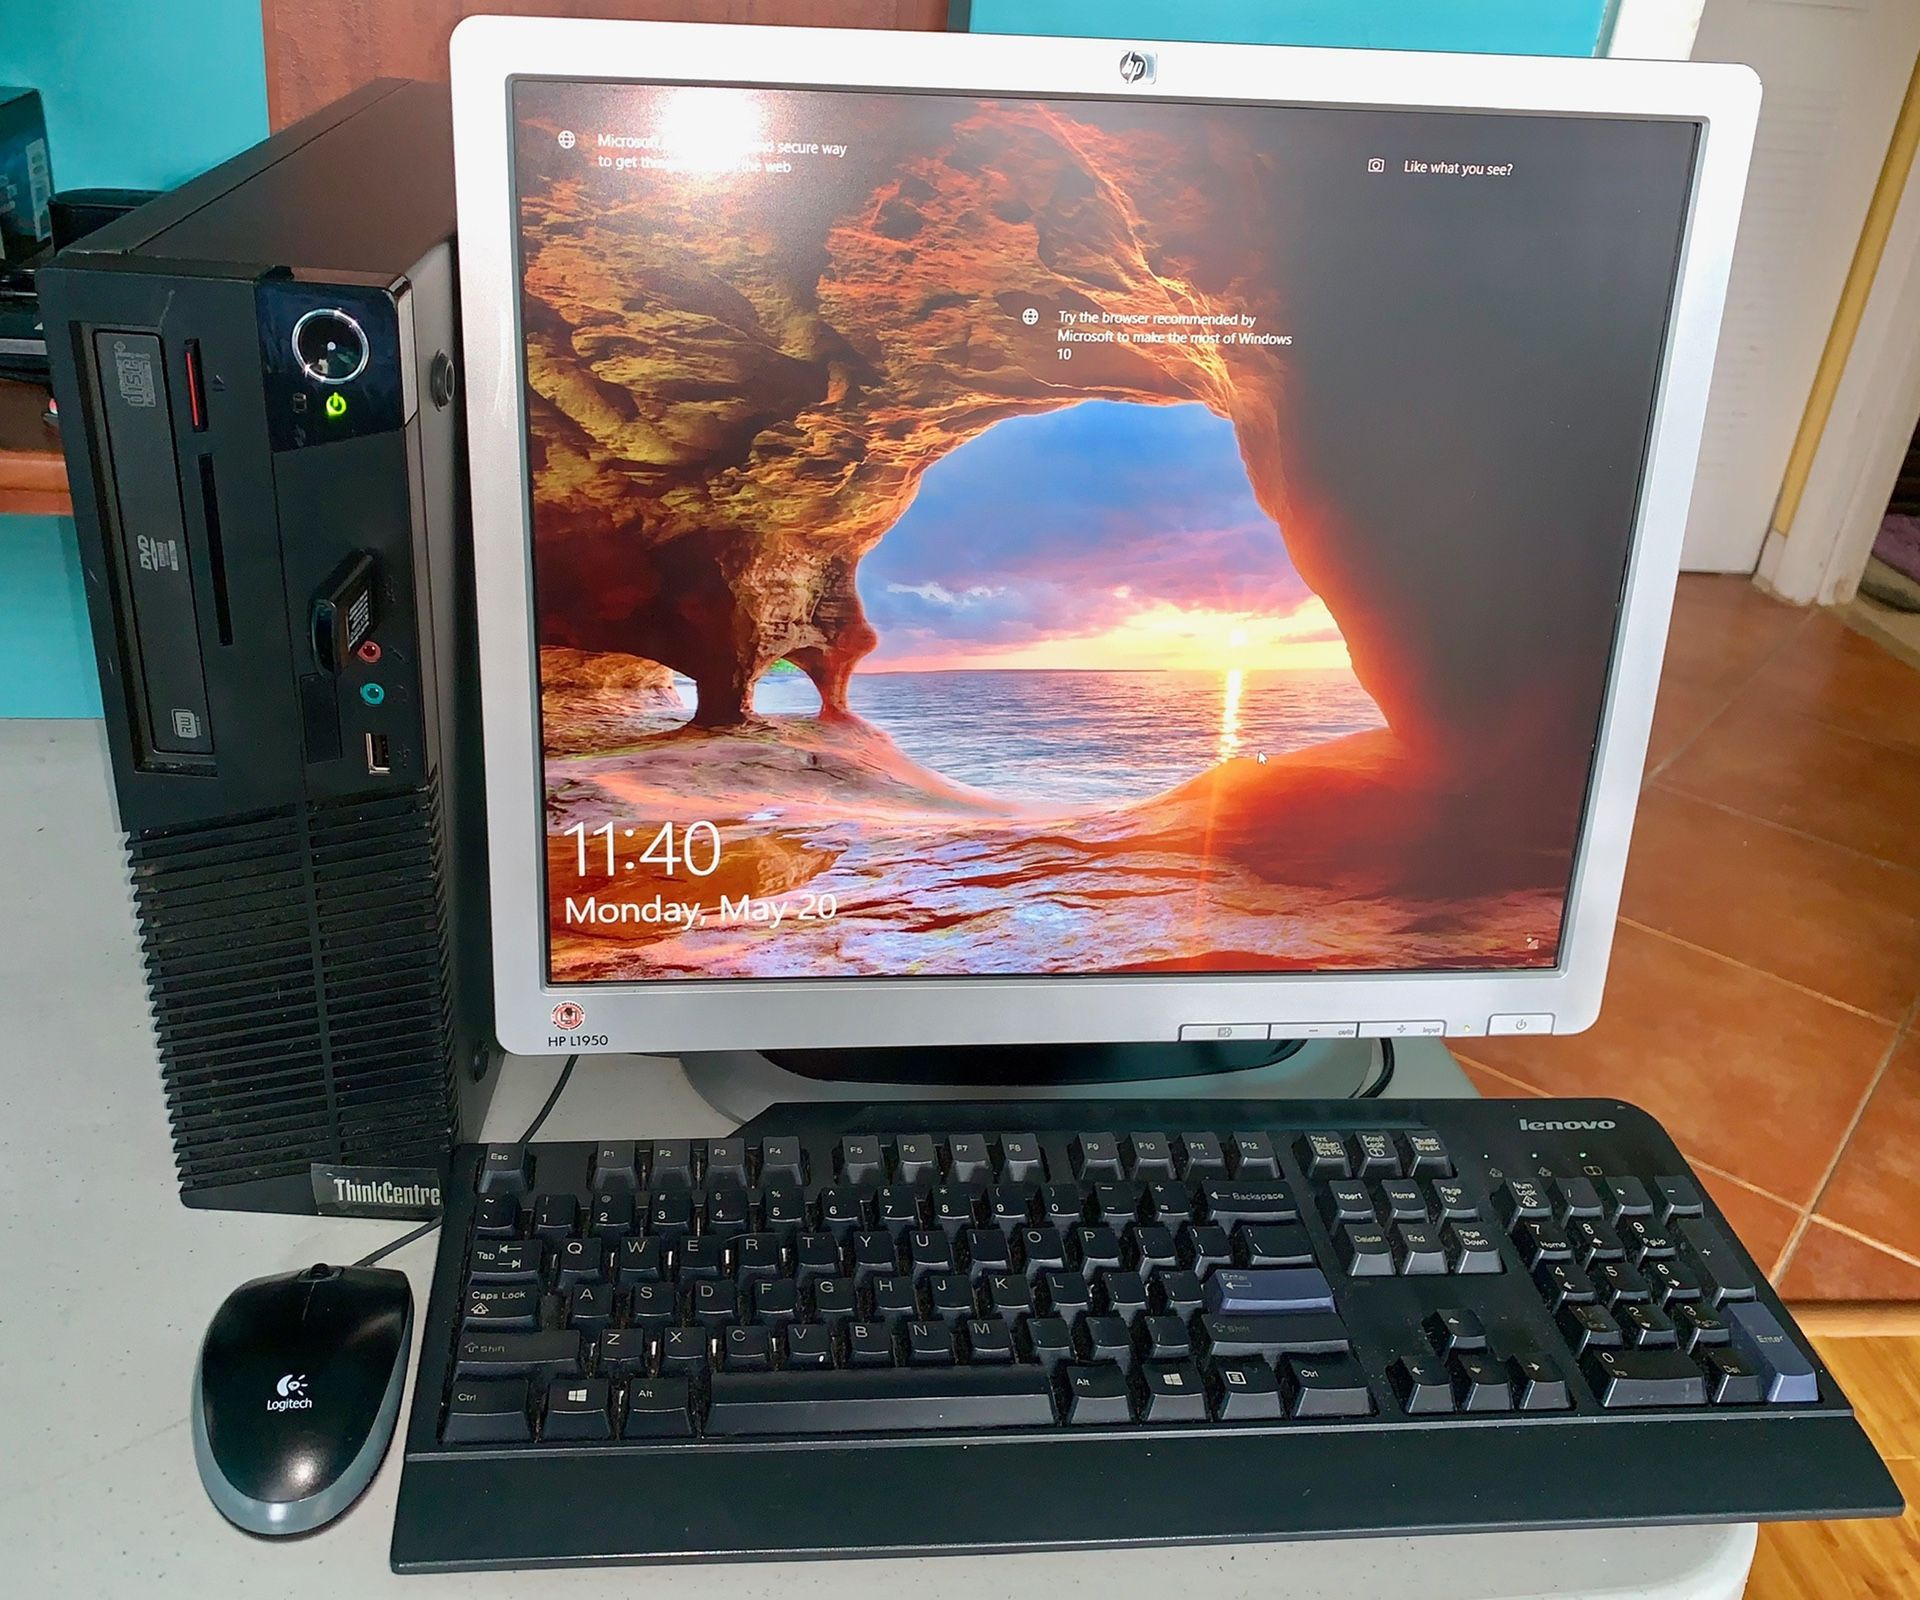 Lenovo ThinkCentre SFF Desktop PC 250GB HDD, Intel Core i5, 3.20GHz, 4GB RAM Computer System